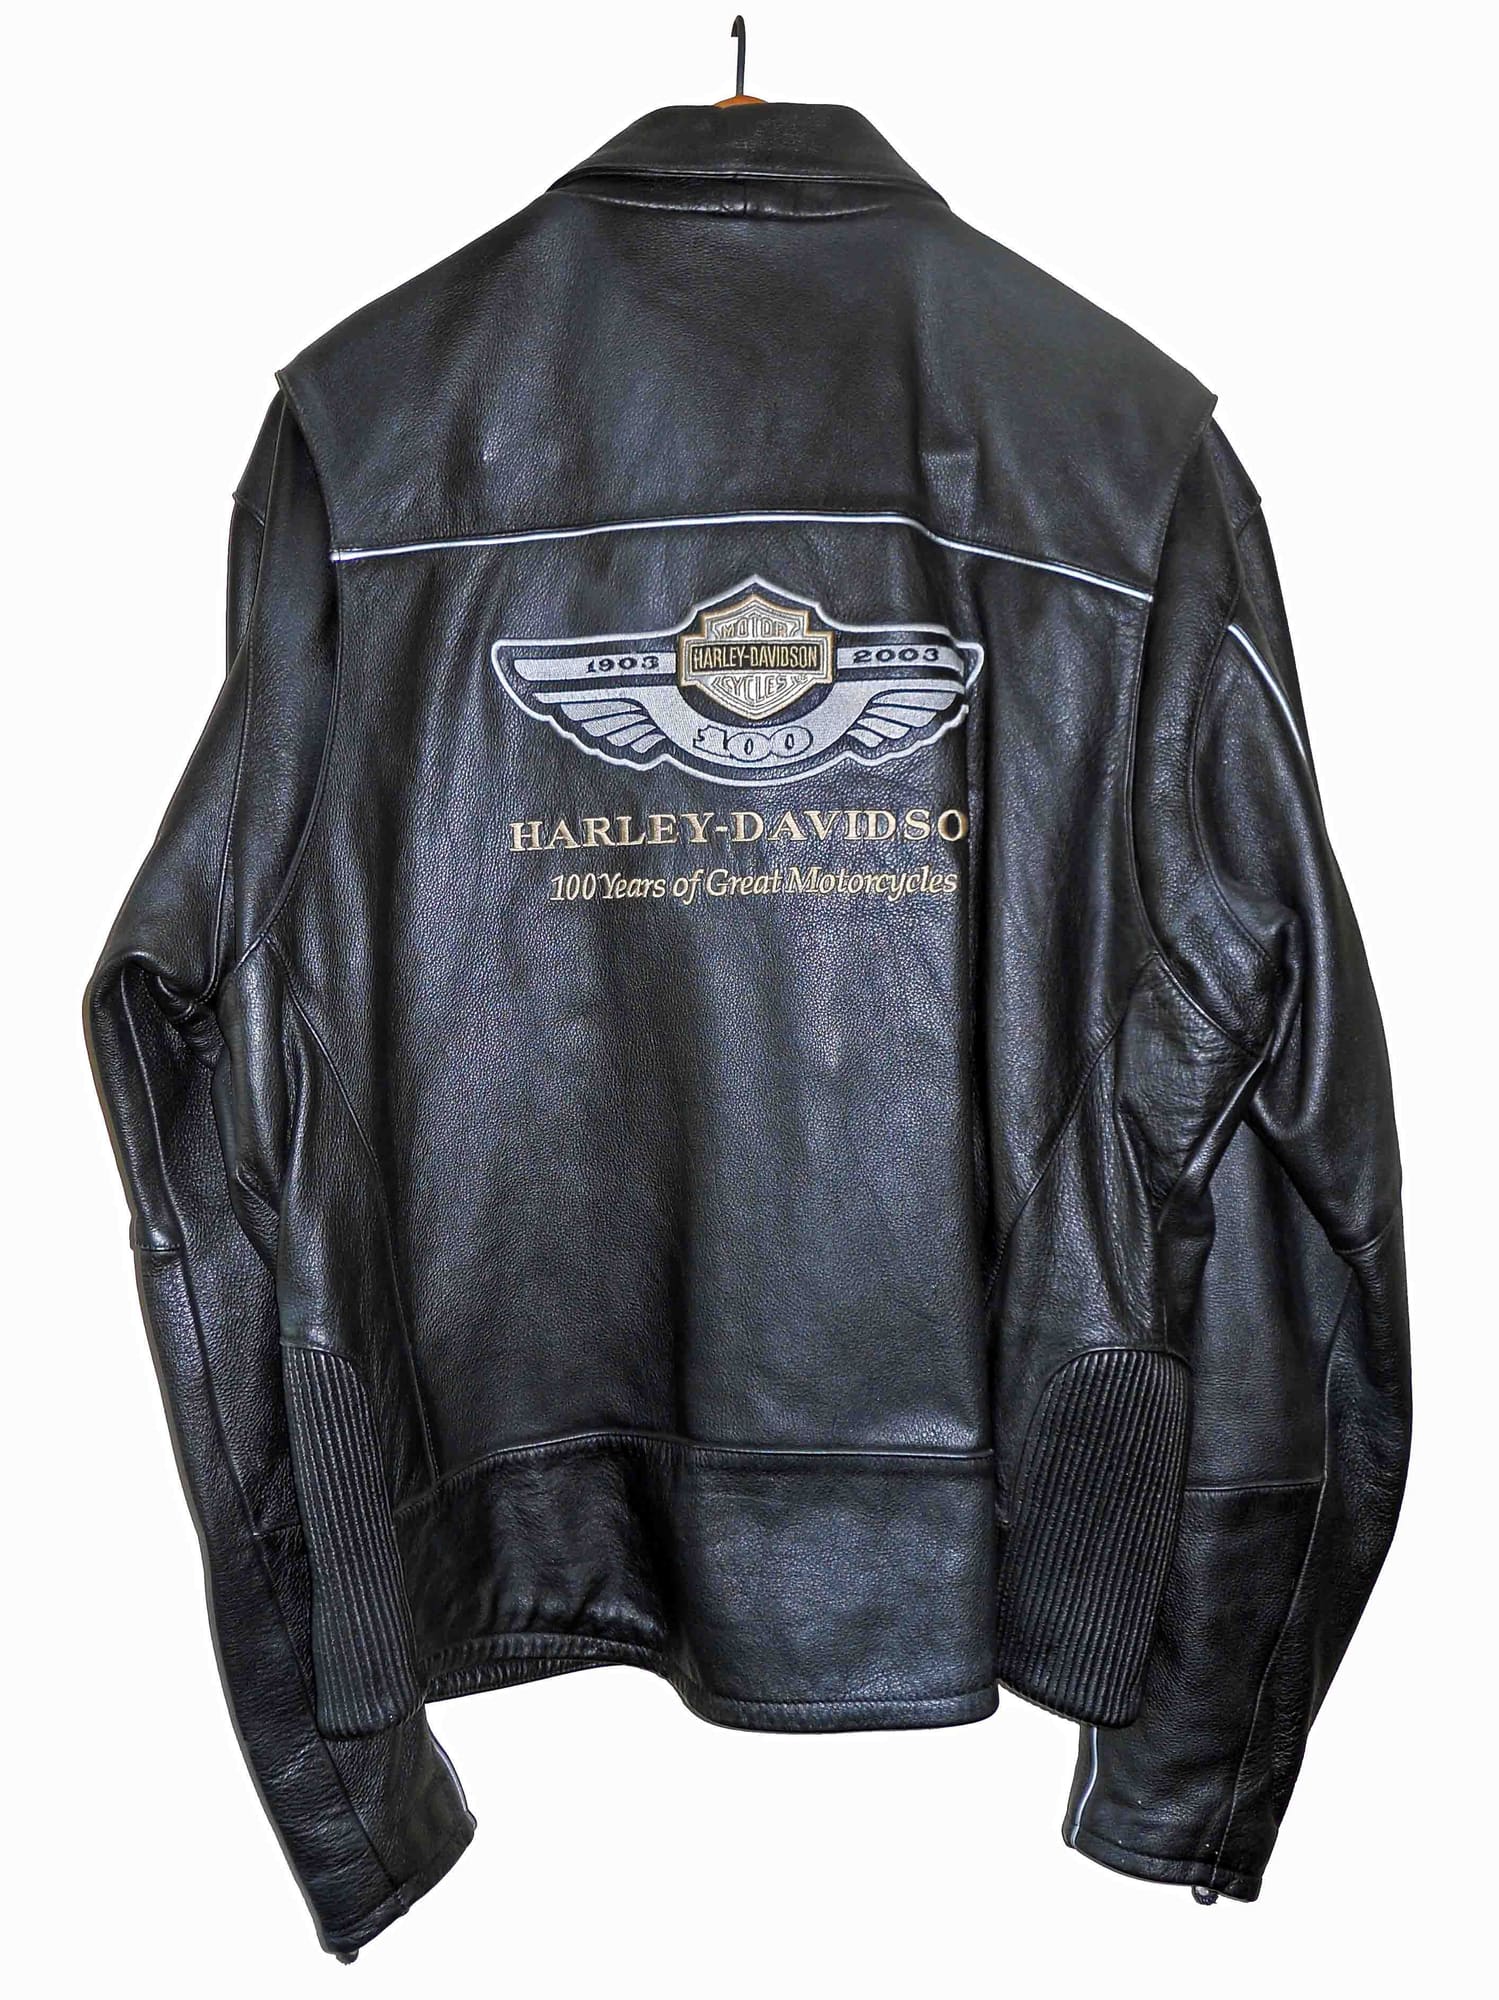 Harley, 100th Anniversary, Leather Jacket, New $200 - Harley Davidson ...